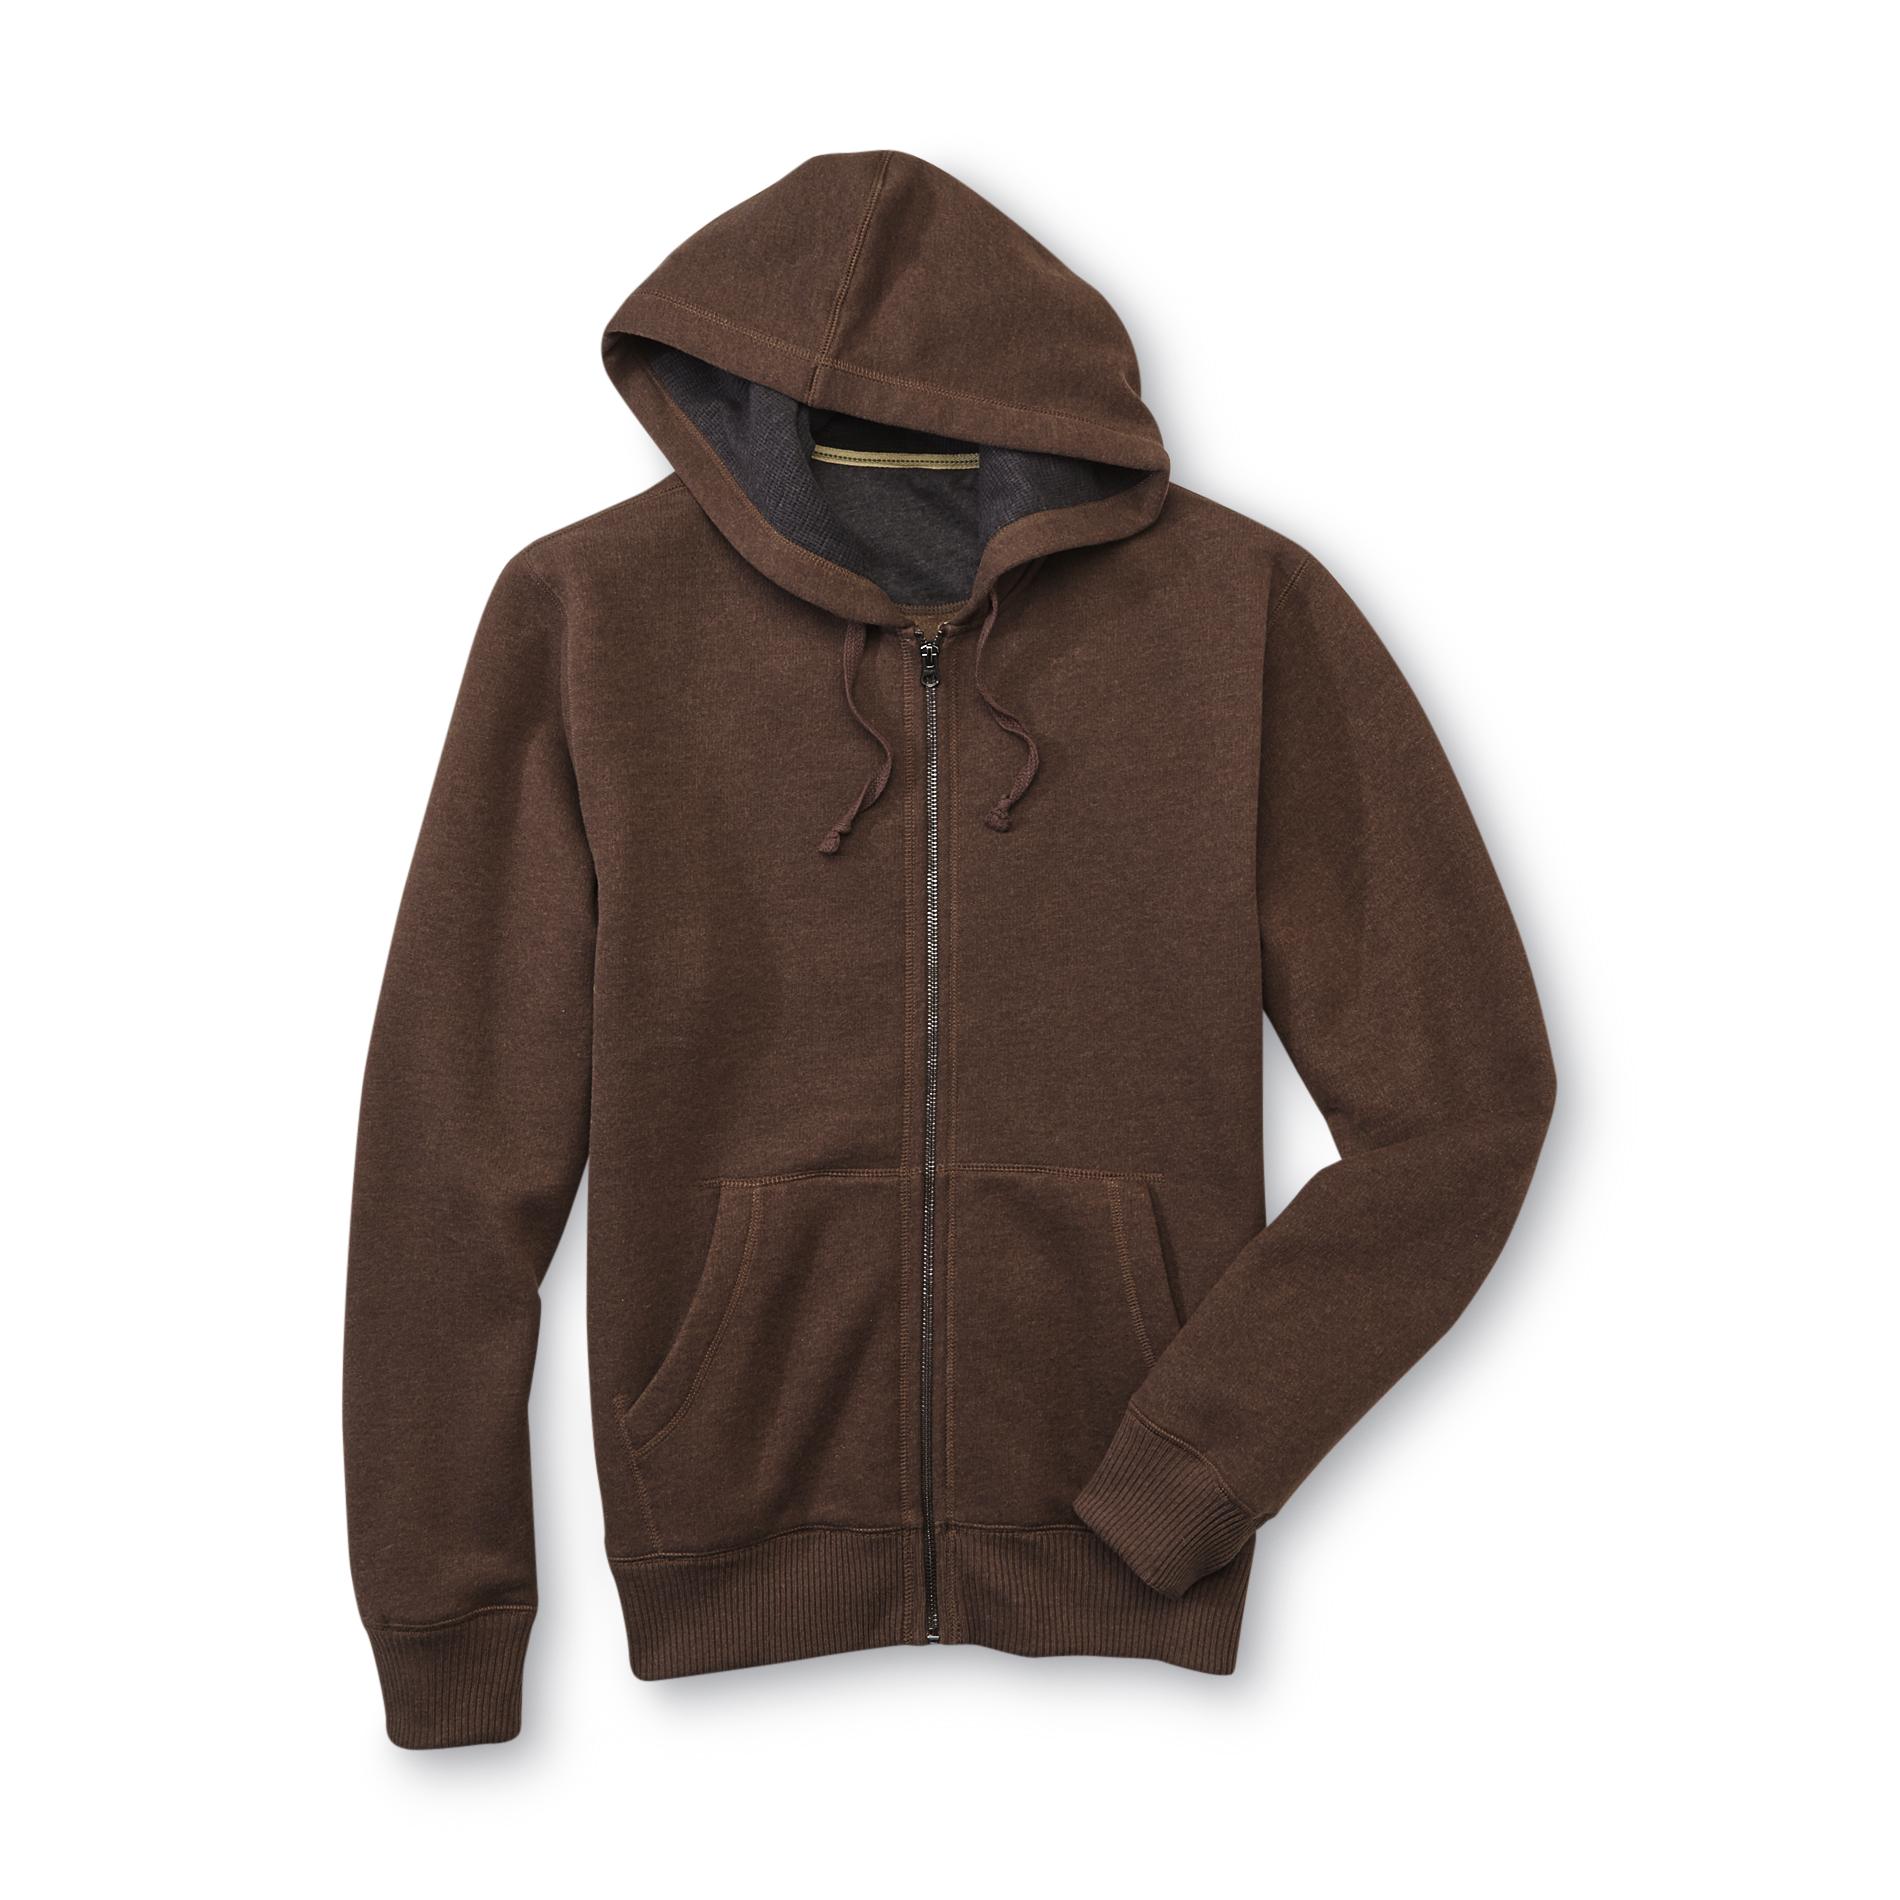 Outdoor Life Men's Fleece-Lined Knit Hooded Jacket